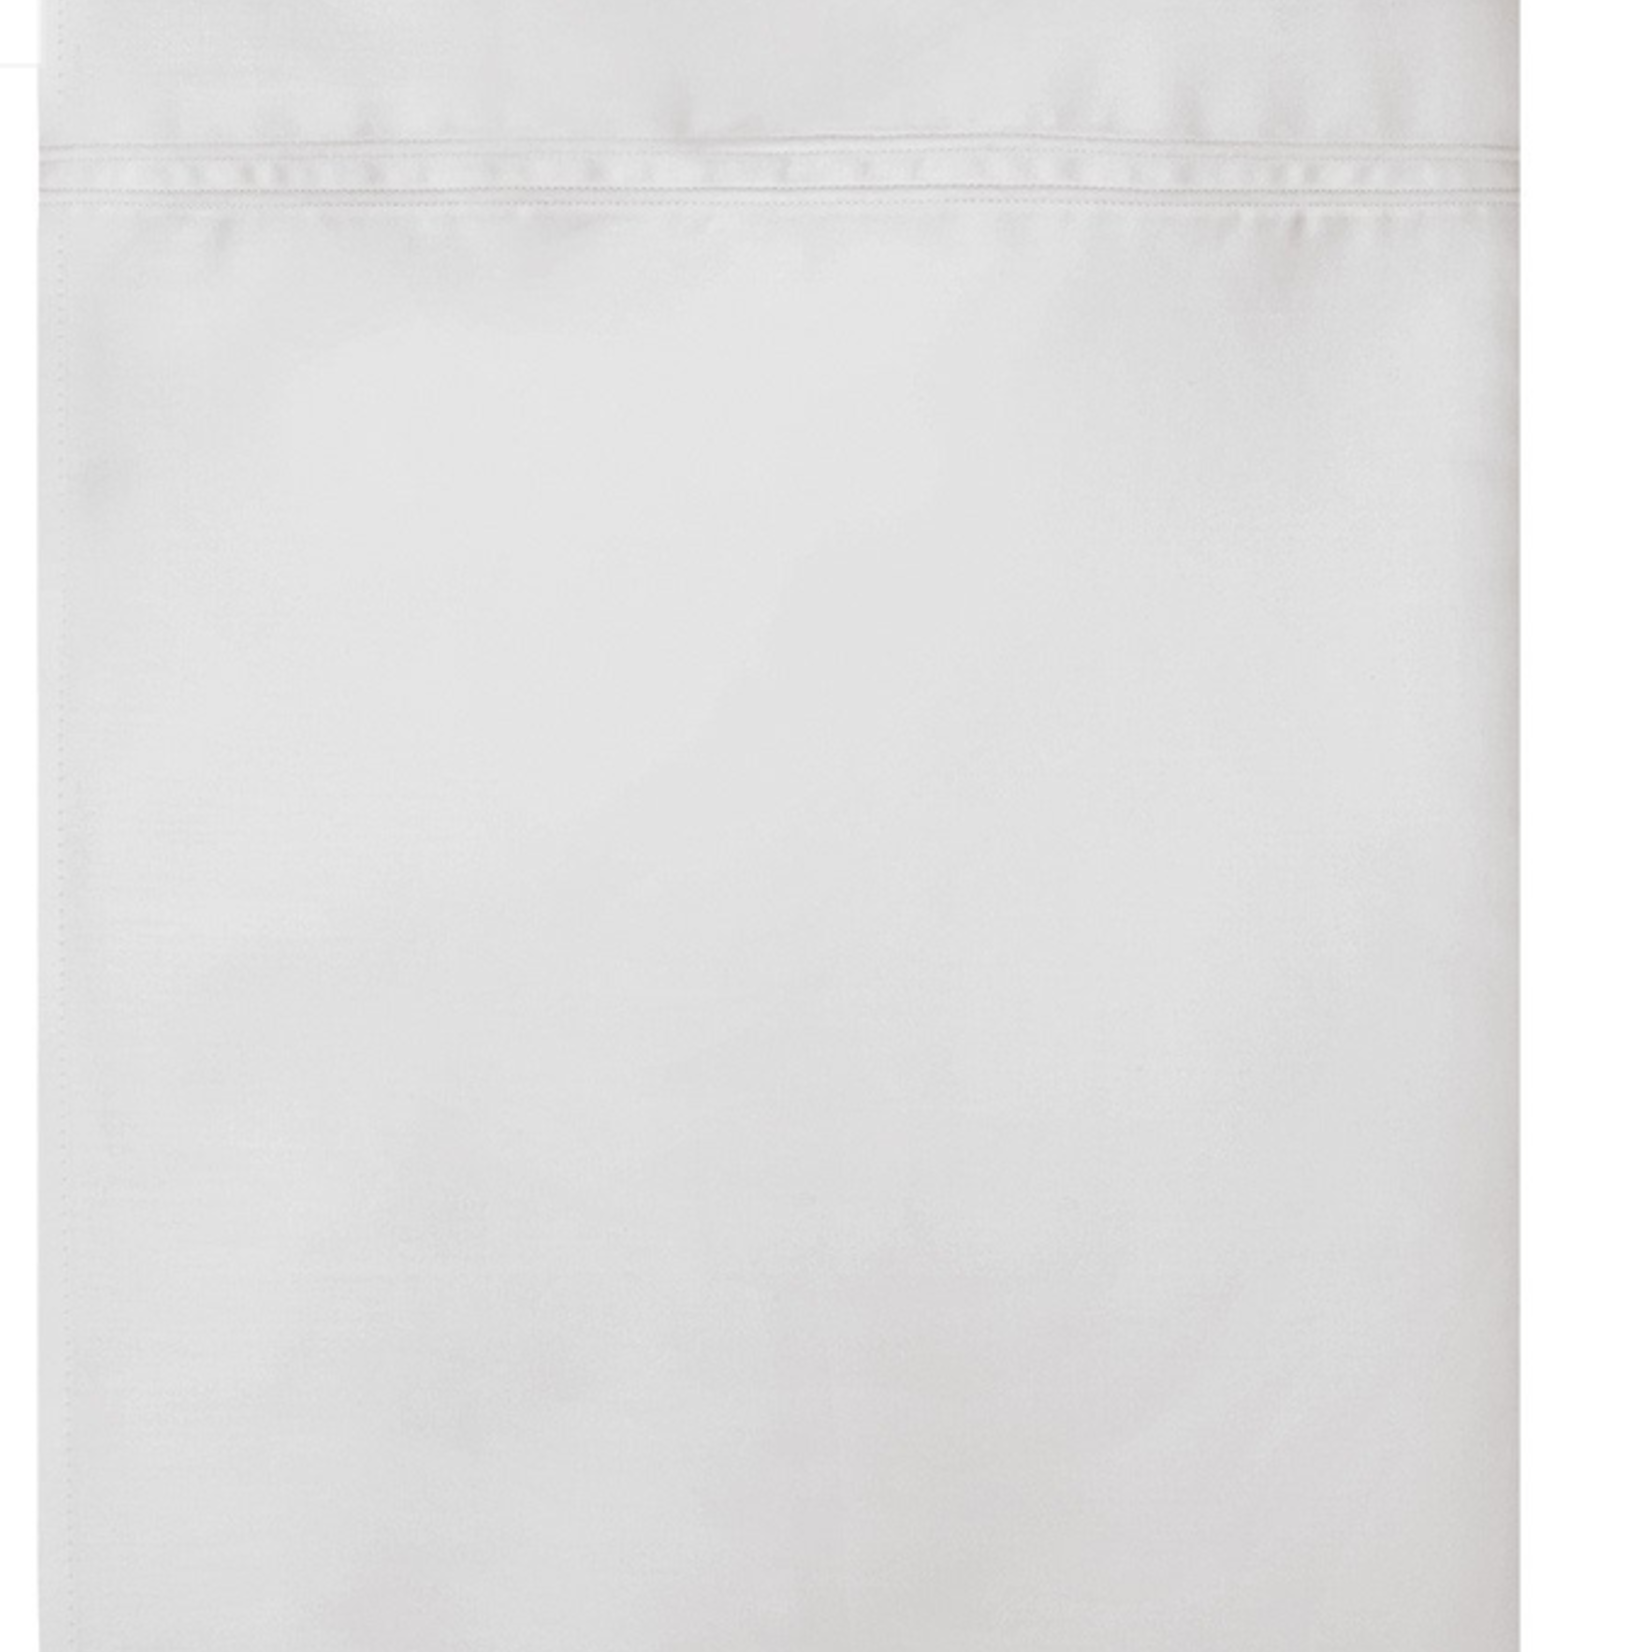 Triomphe (Double Saddle Stitch Cotton Sateen- 310 t/c)Flat Sheet